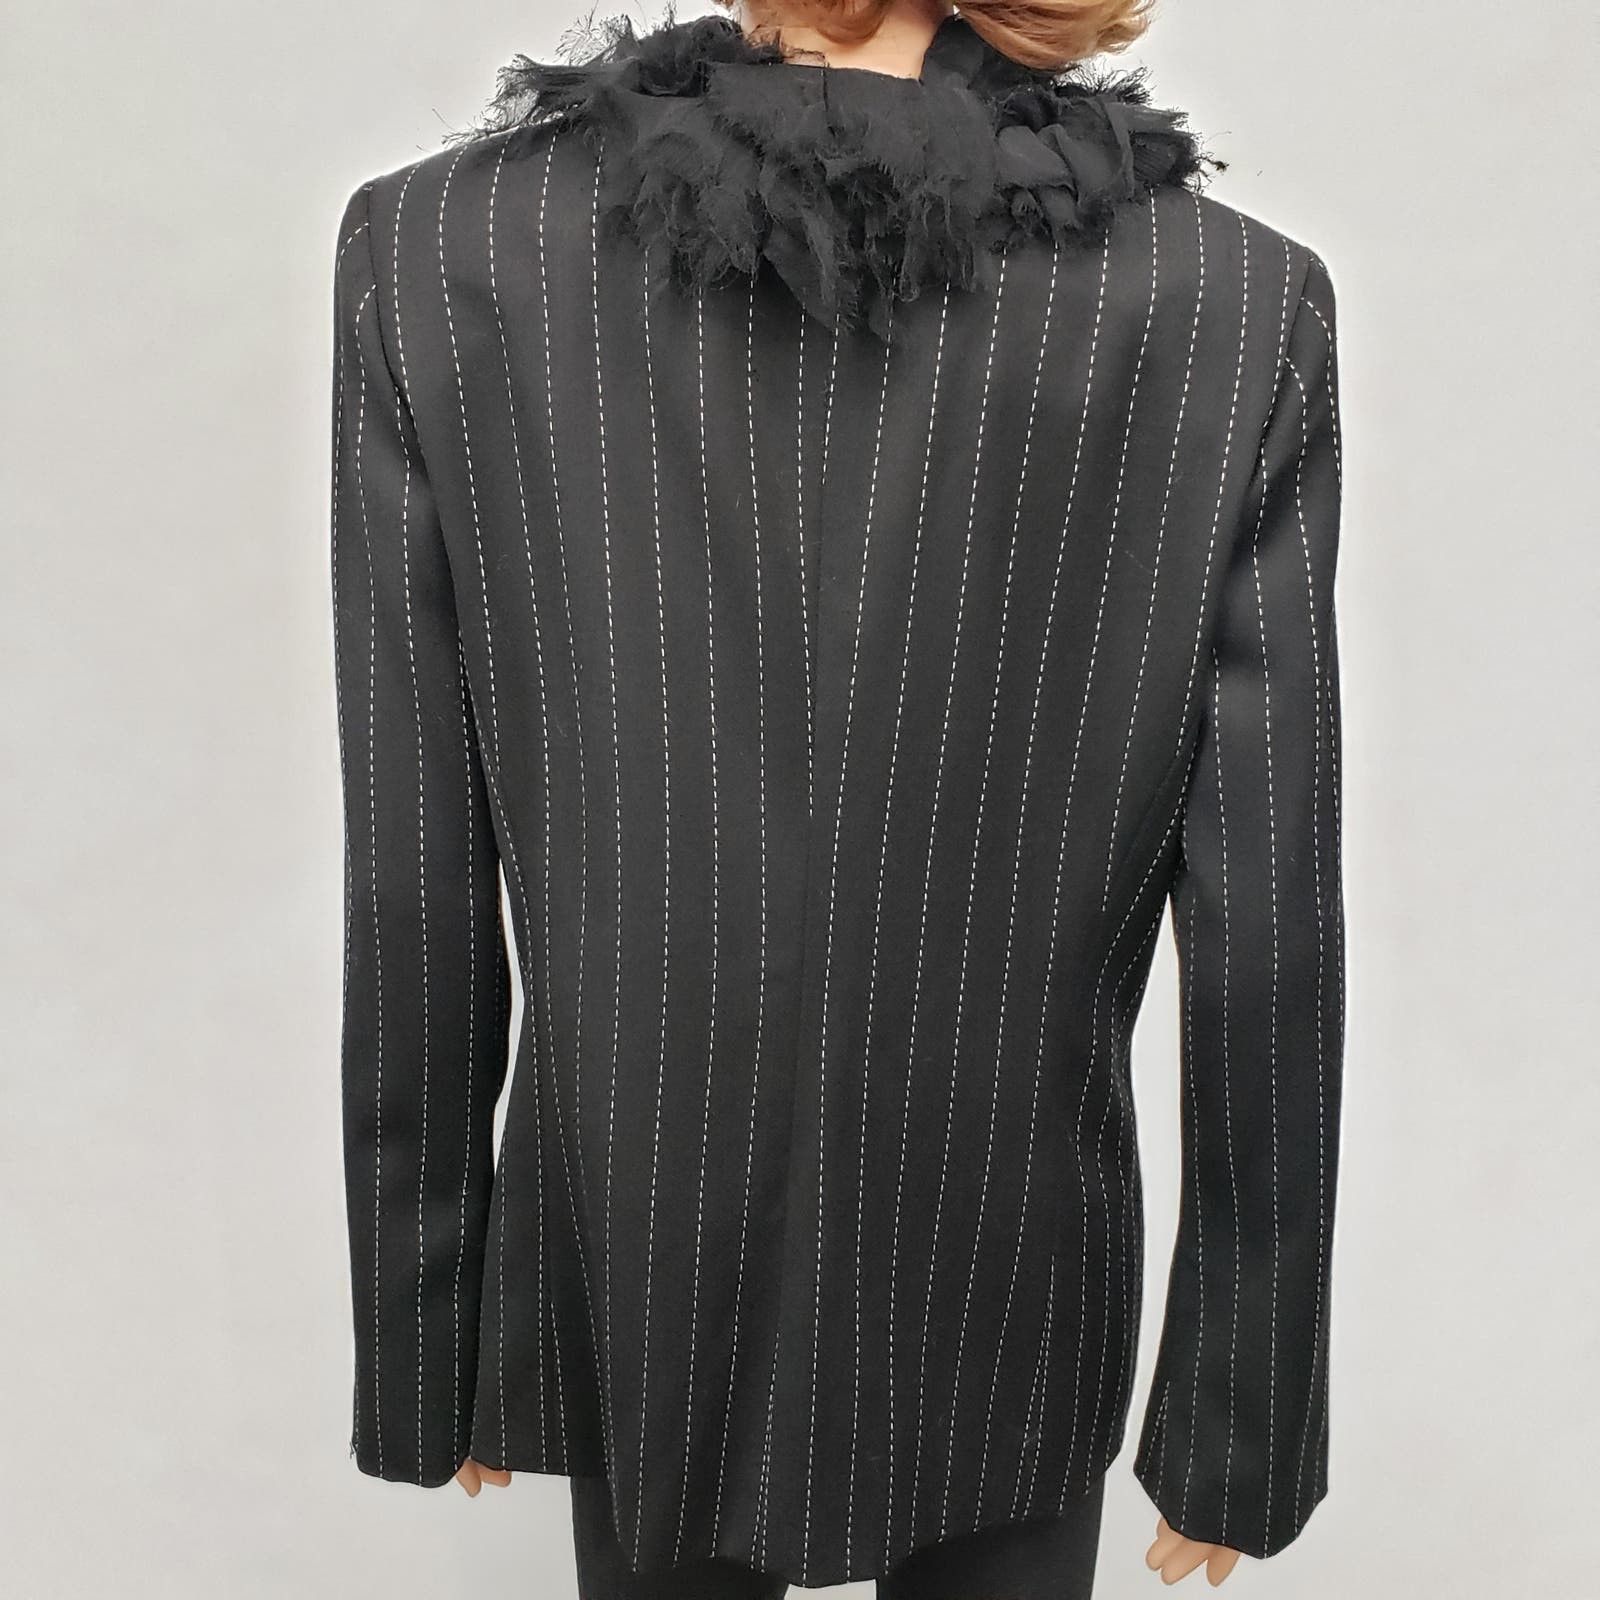 Vintage Pamela Vanderlinde Zone Blazer Jacket Pinstriped Ruffled 8 Size M / US 6-8 / IT 42-44 - 8 Thumbnail